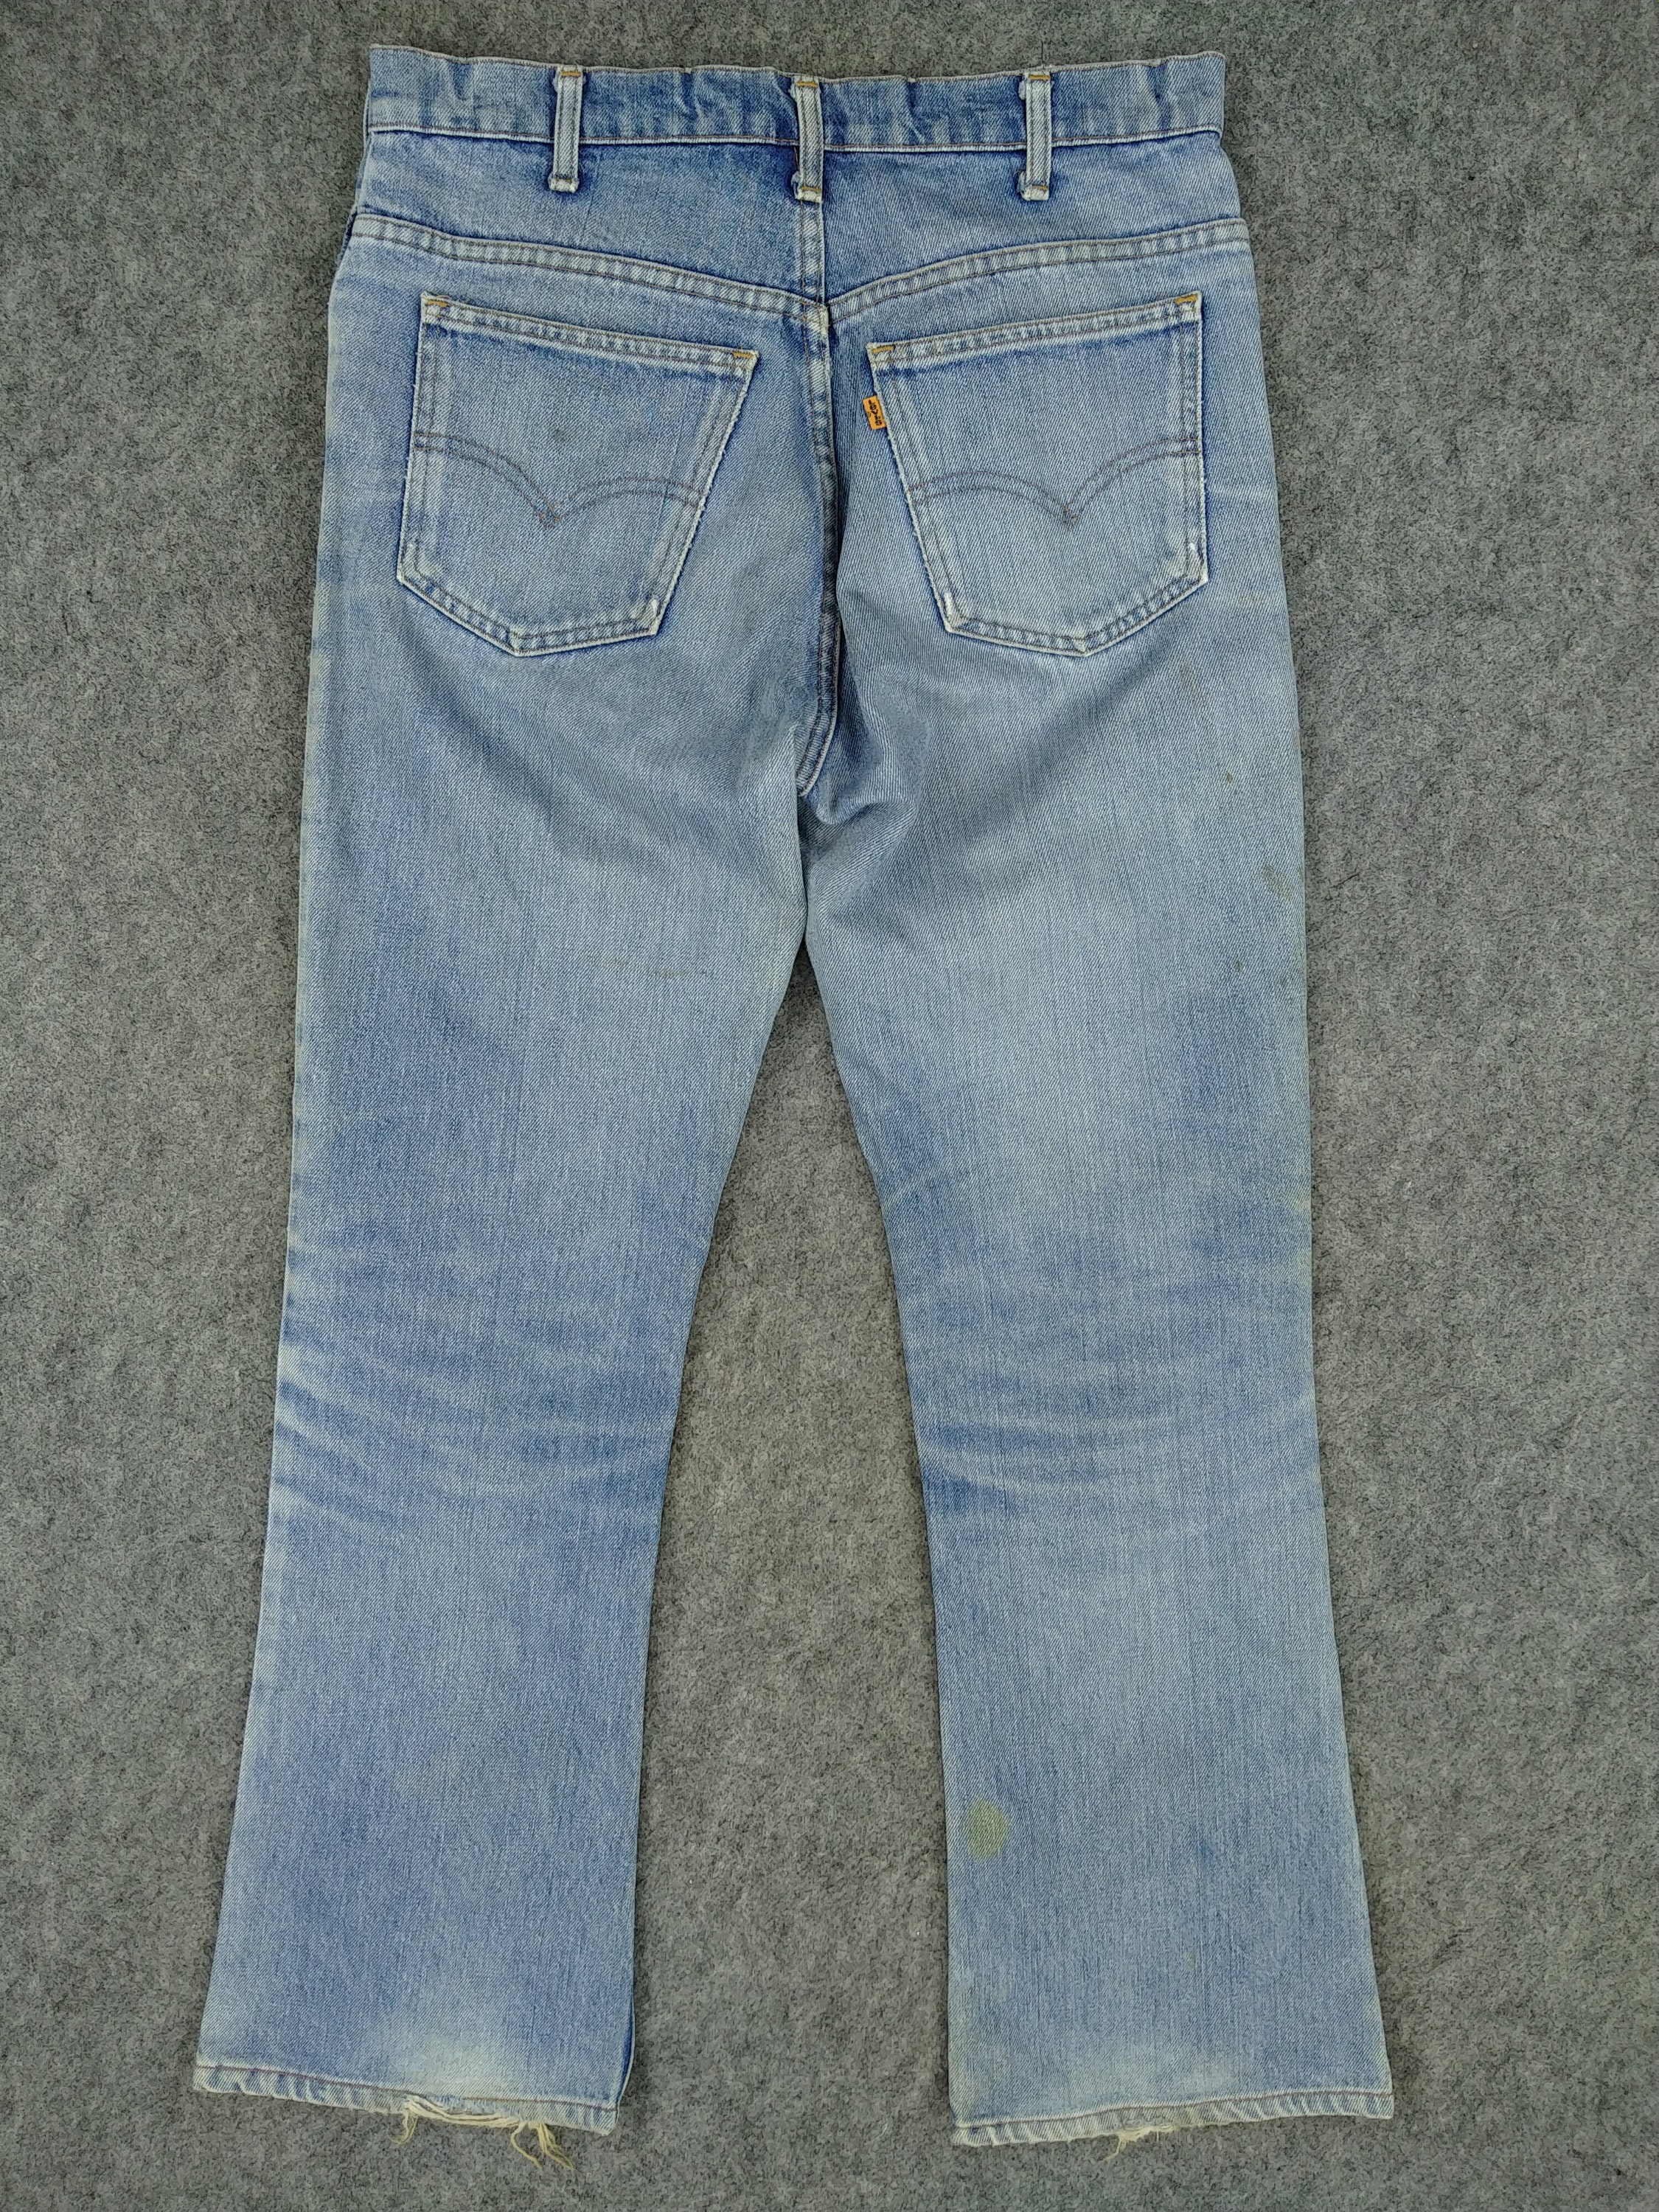 Vintage Levi's 646 Orange Tab Jeans 31x28.5 Light Wash | Etsy